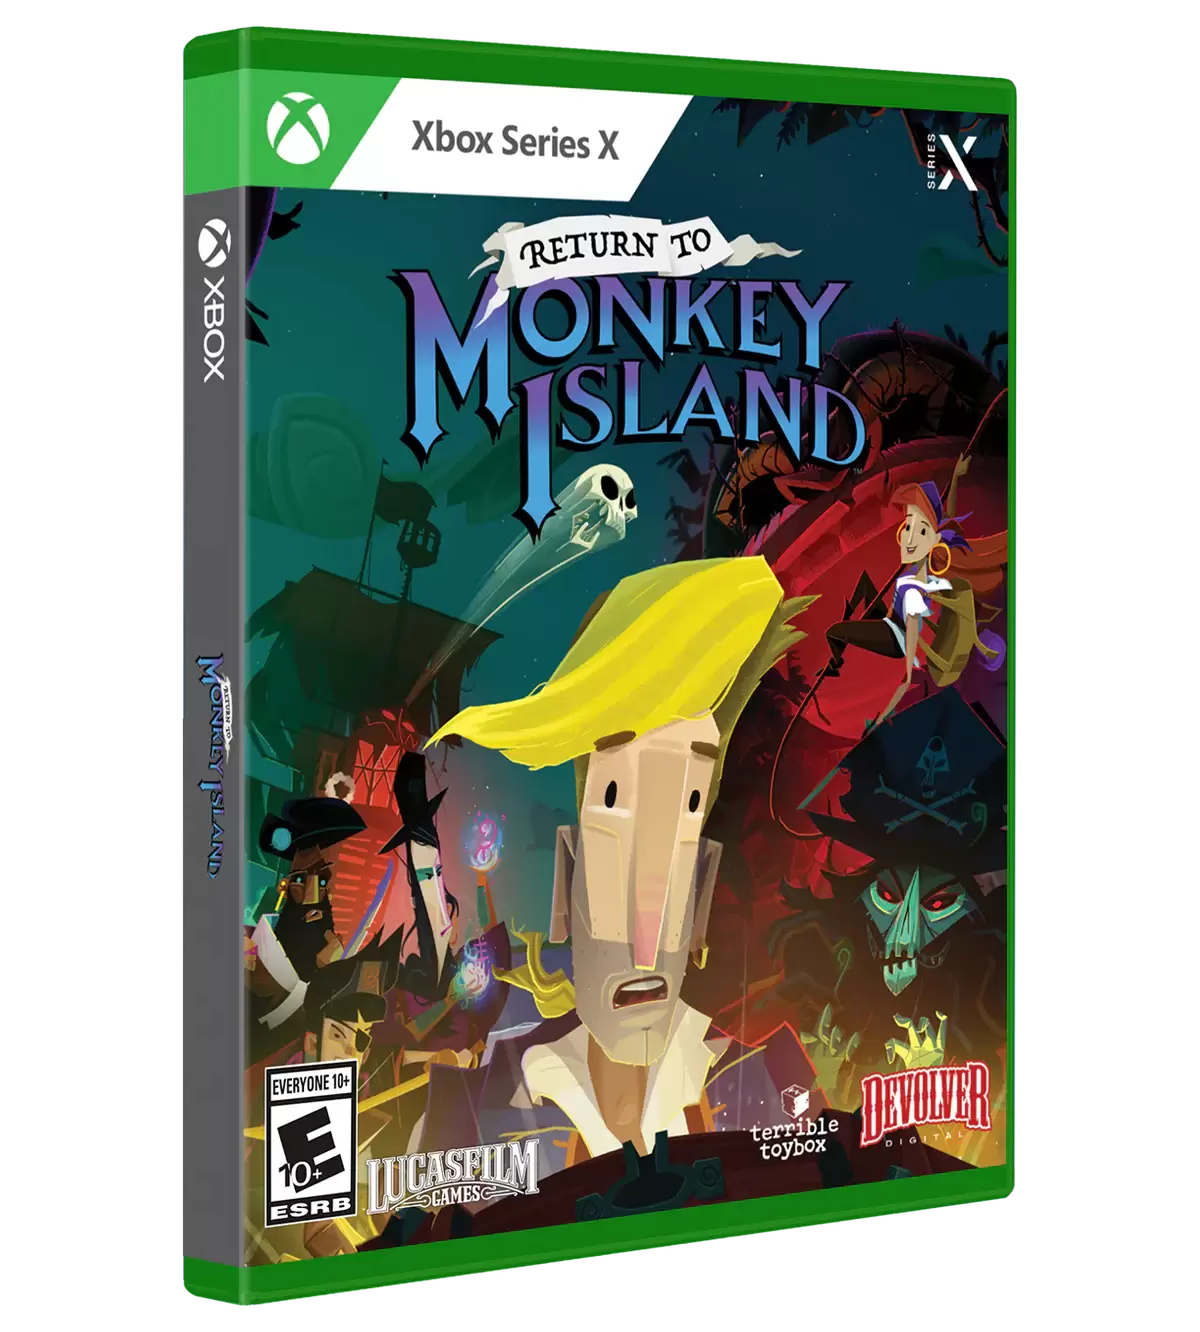 XBOX Series X Games - Return to Monkey Island